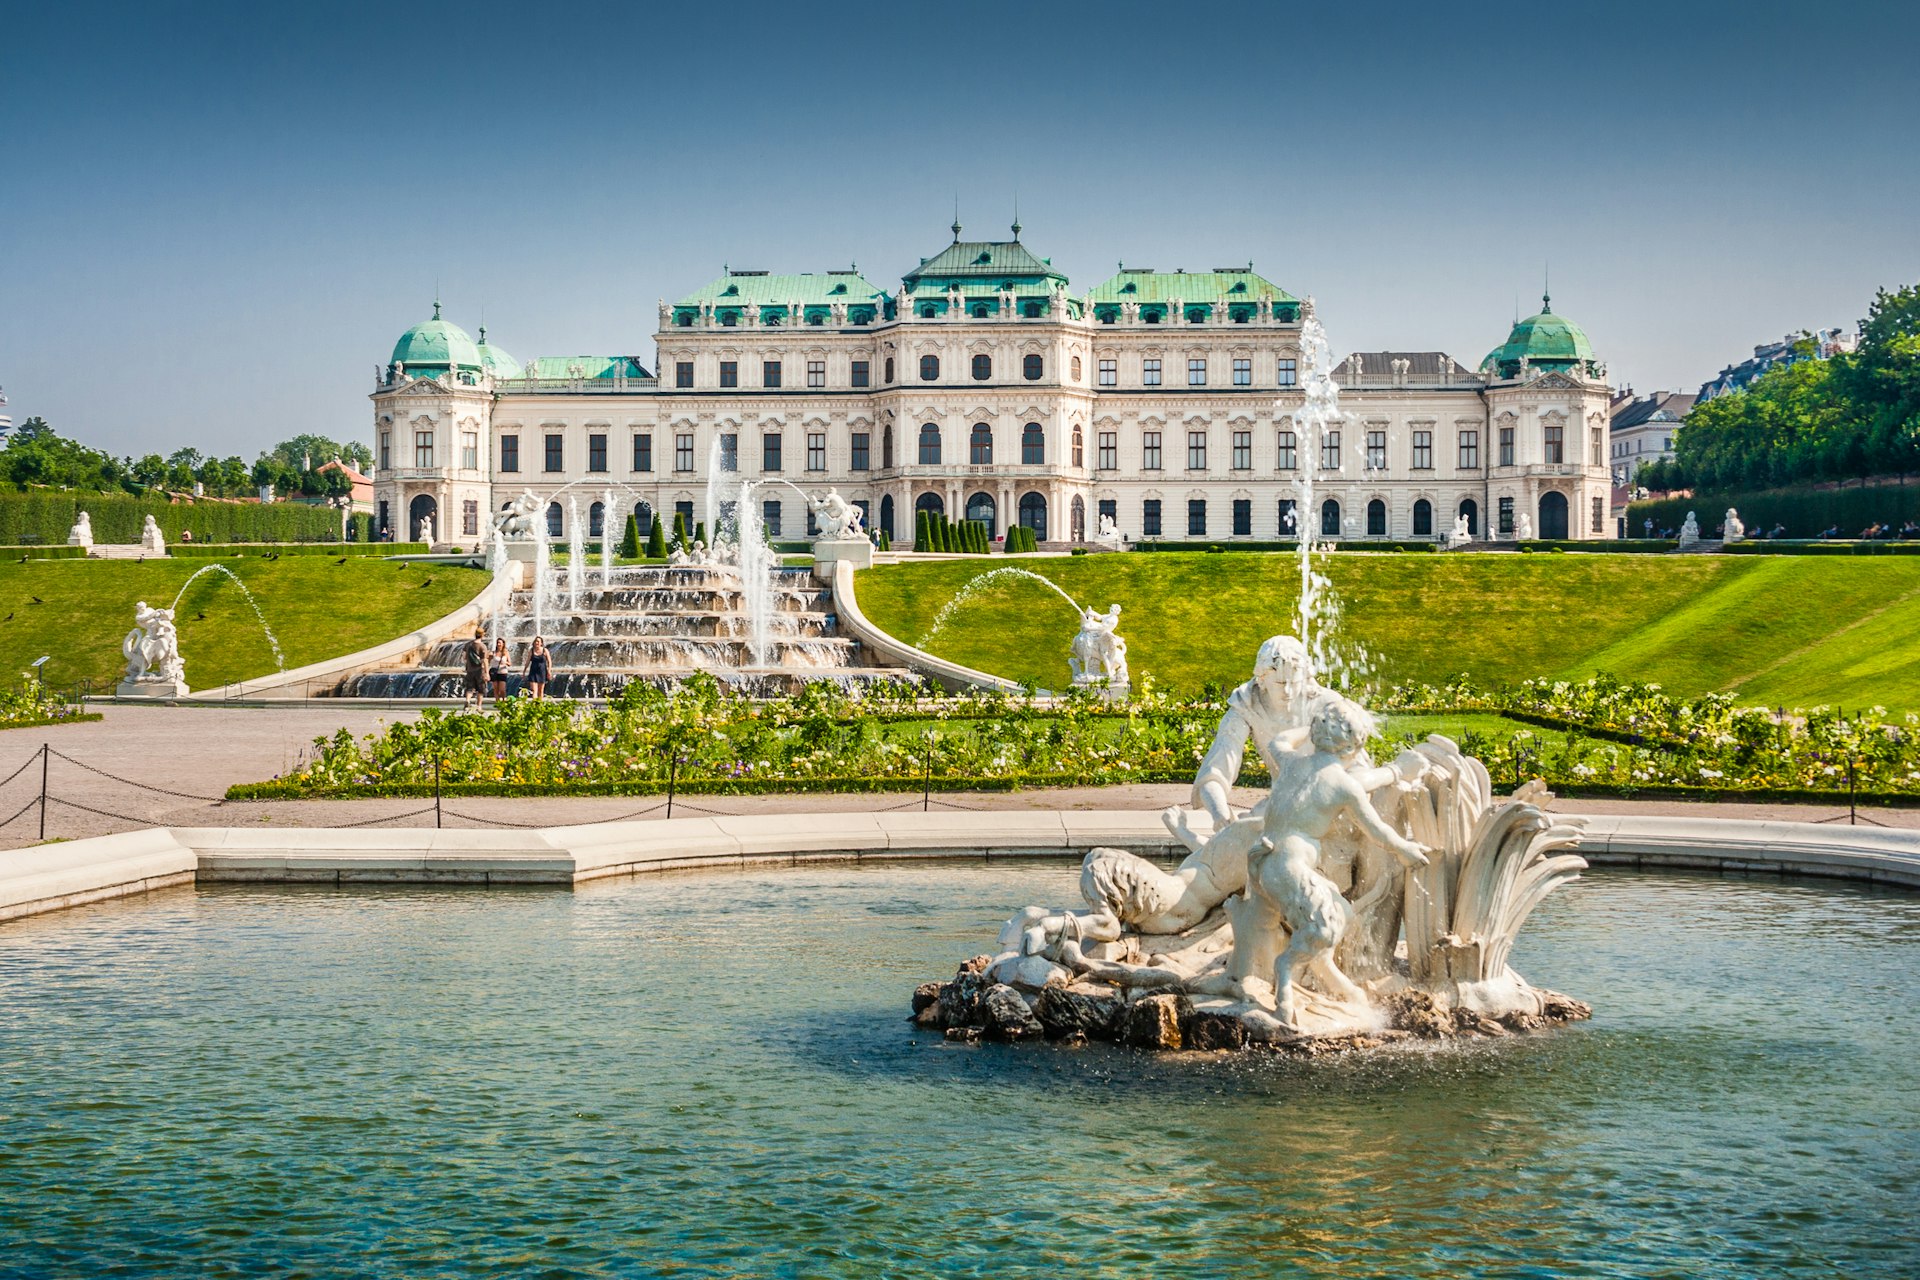 The exterior of Schloss Belvedere, Vienna, Austria